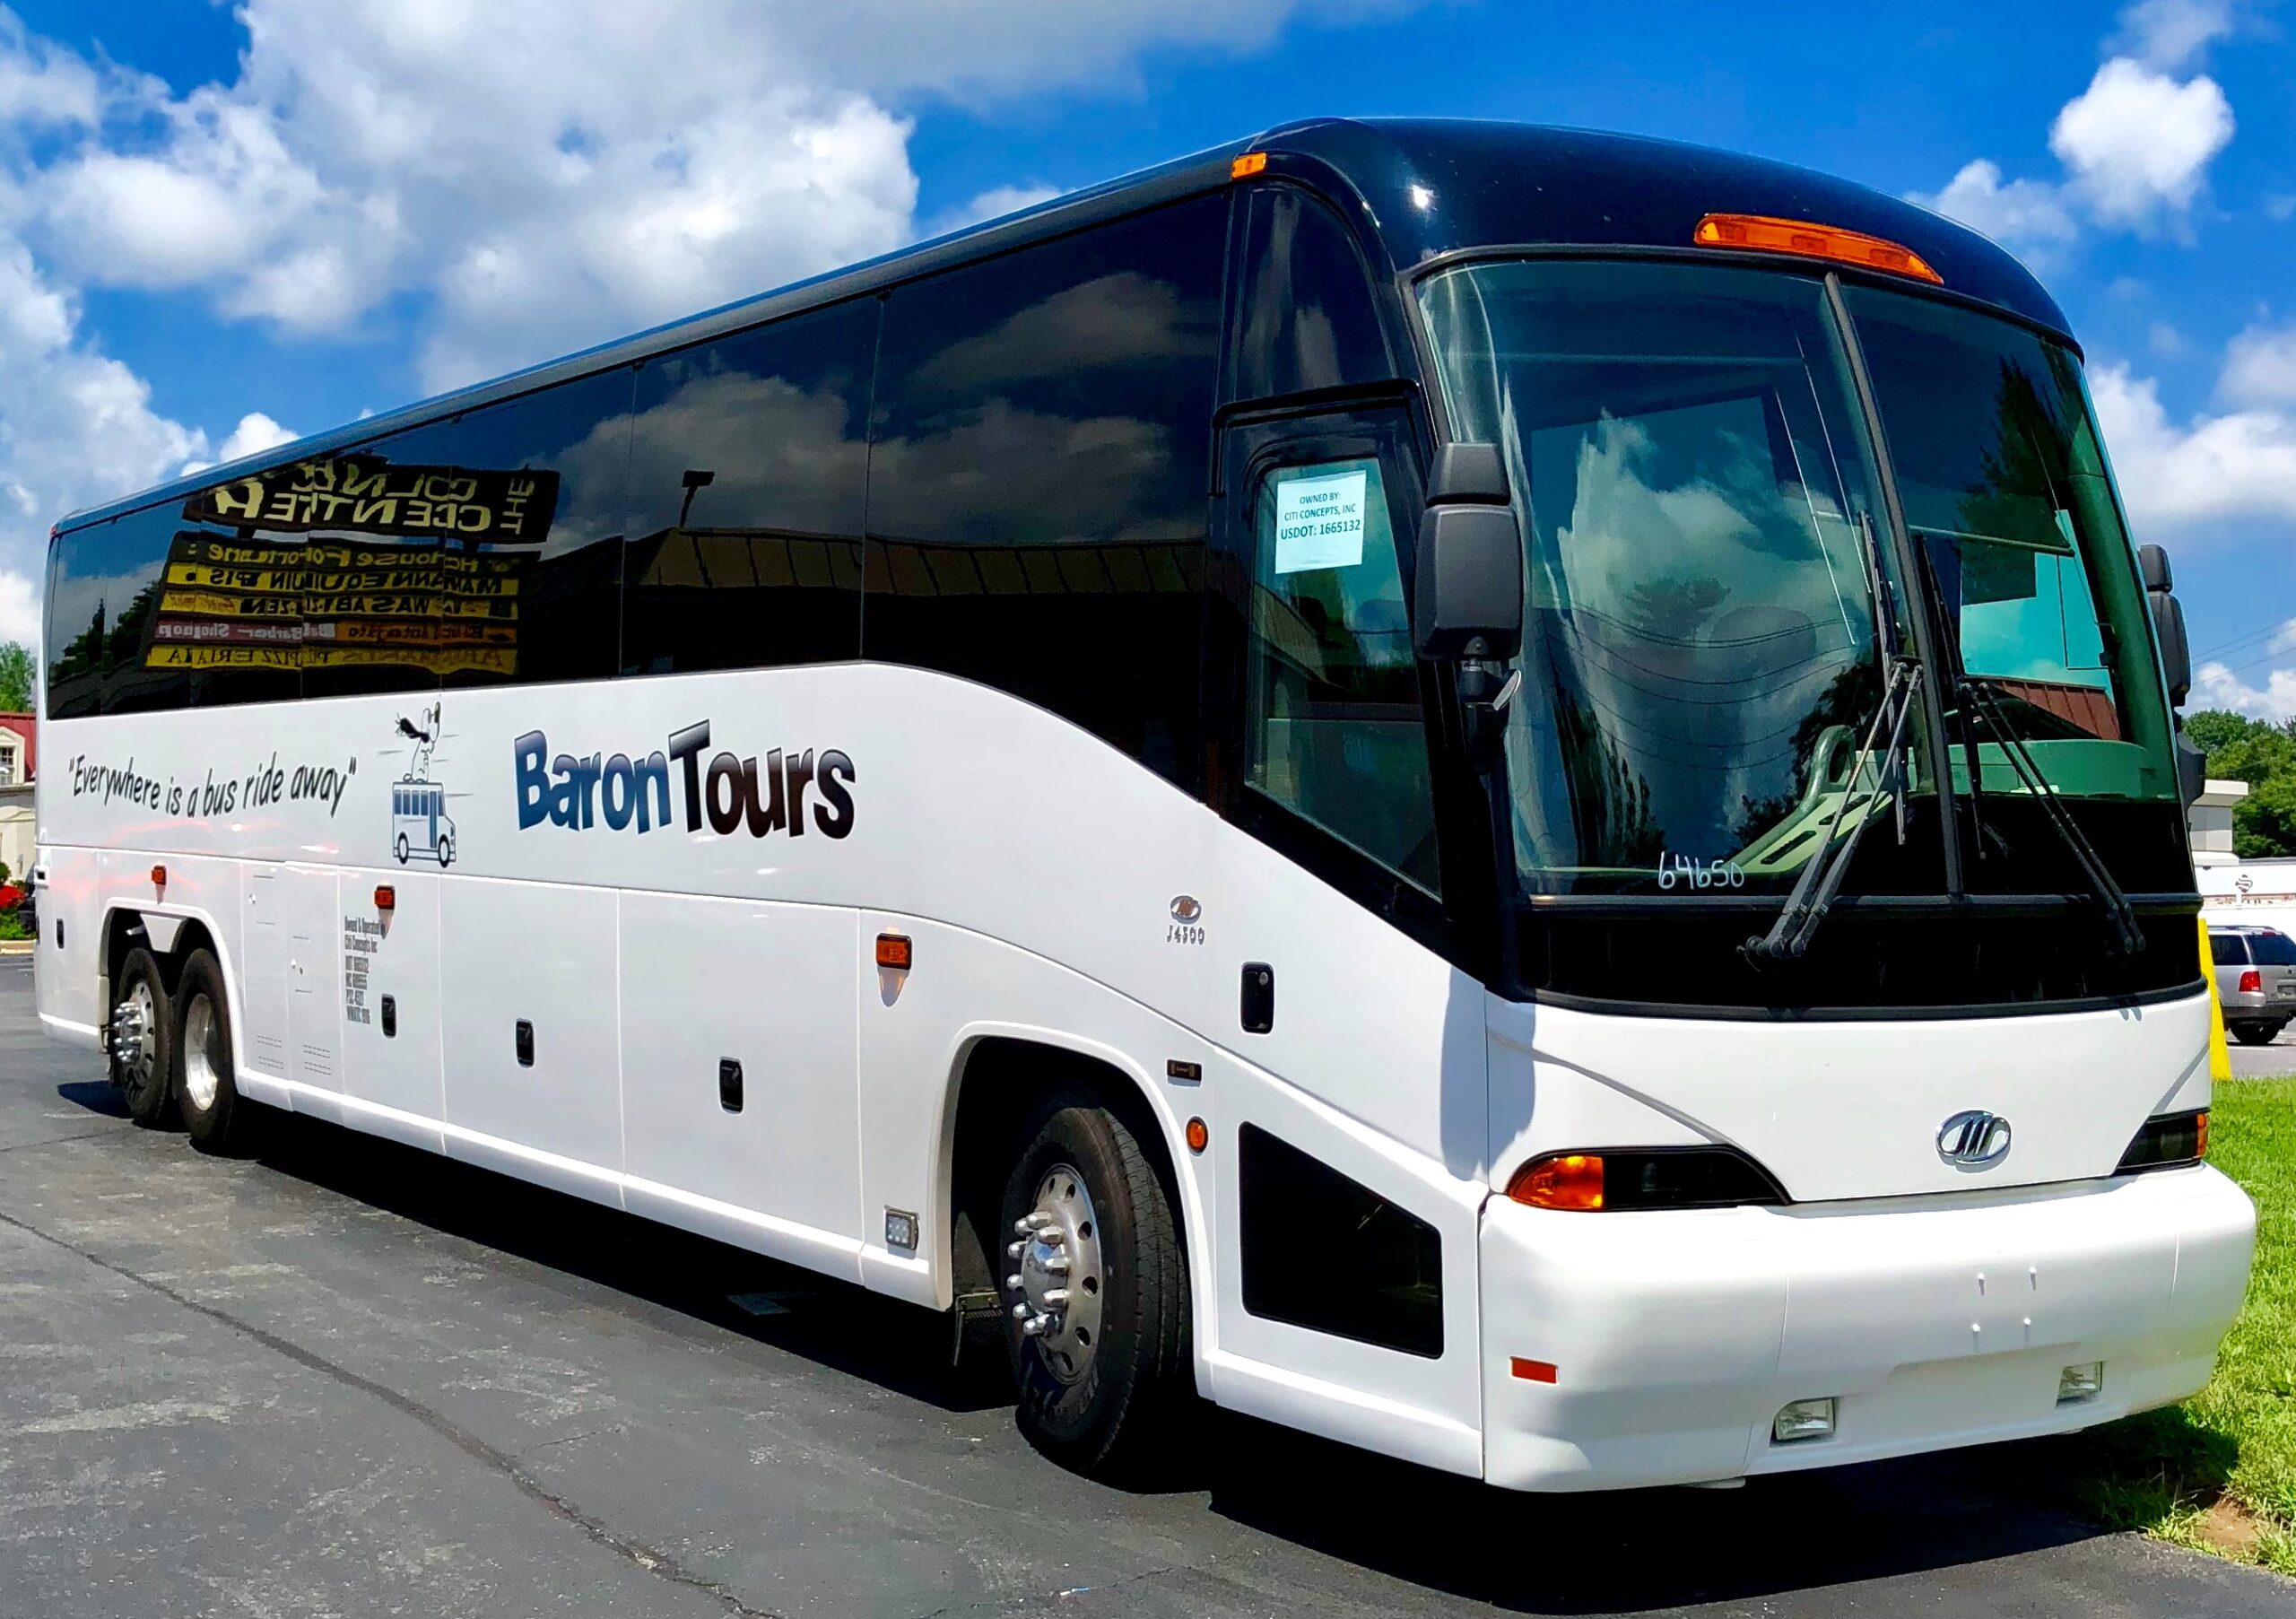 bus tour companies in kansas